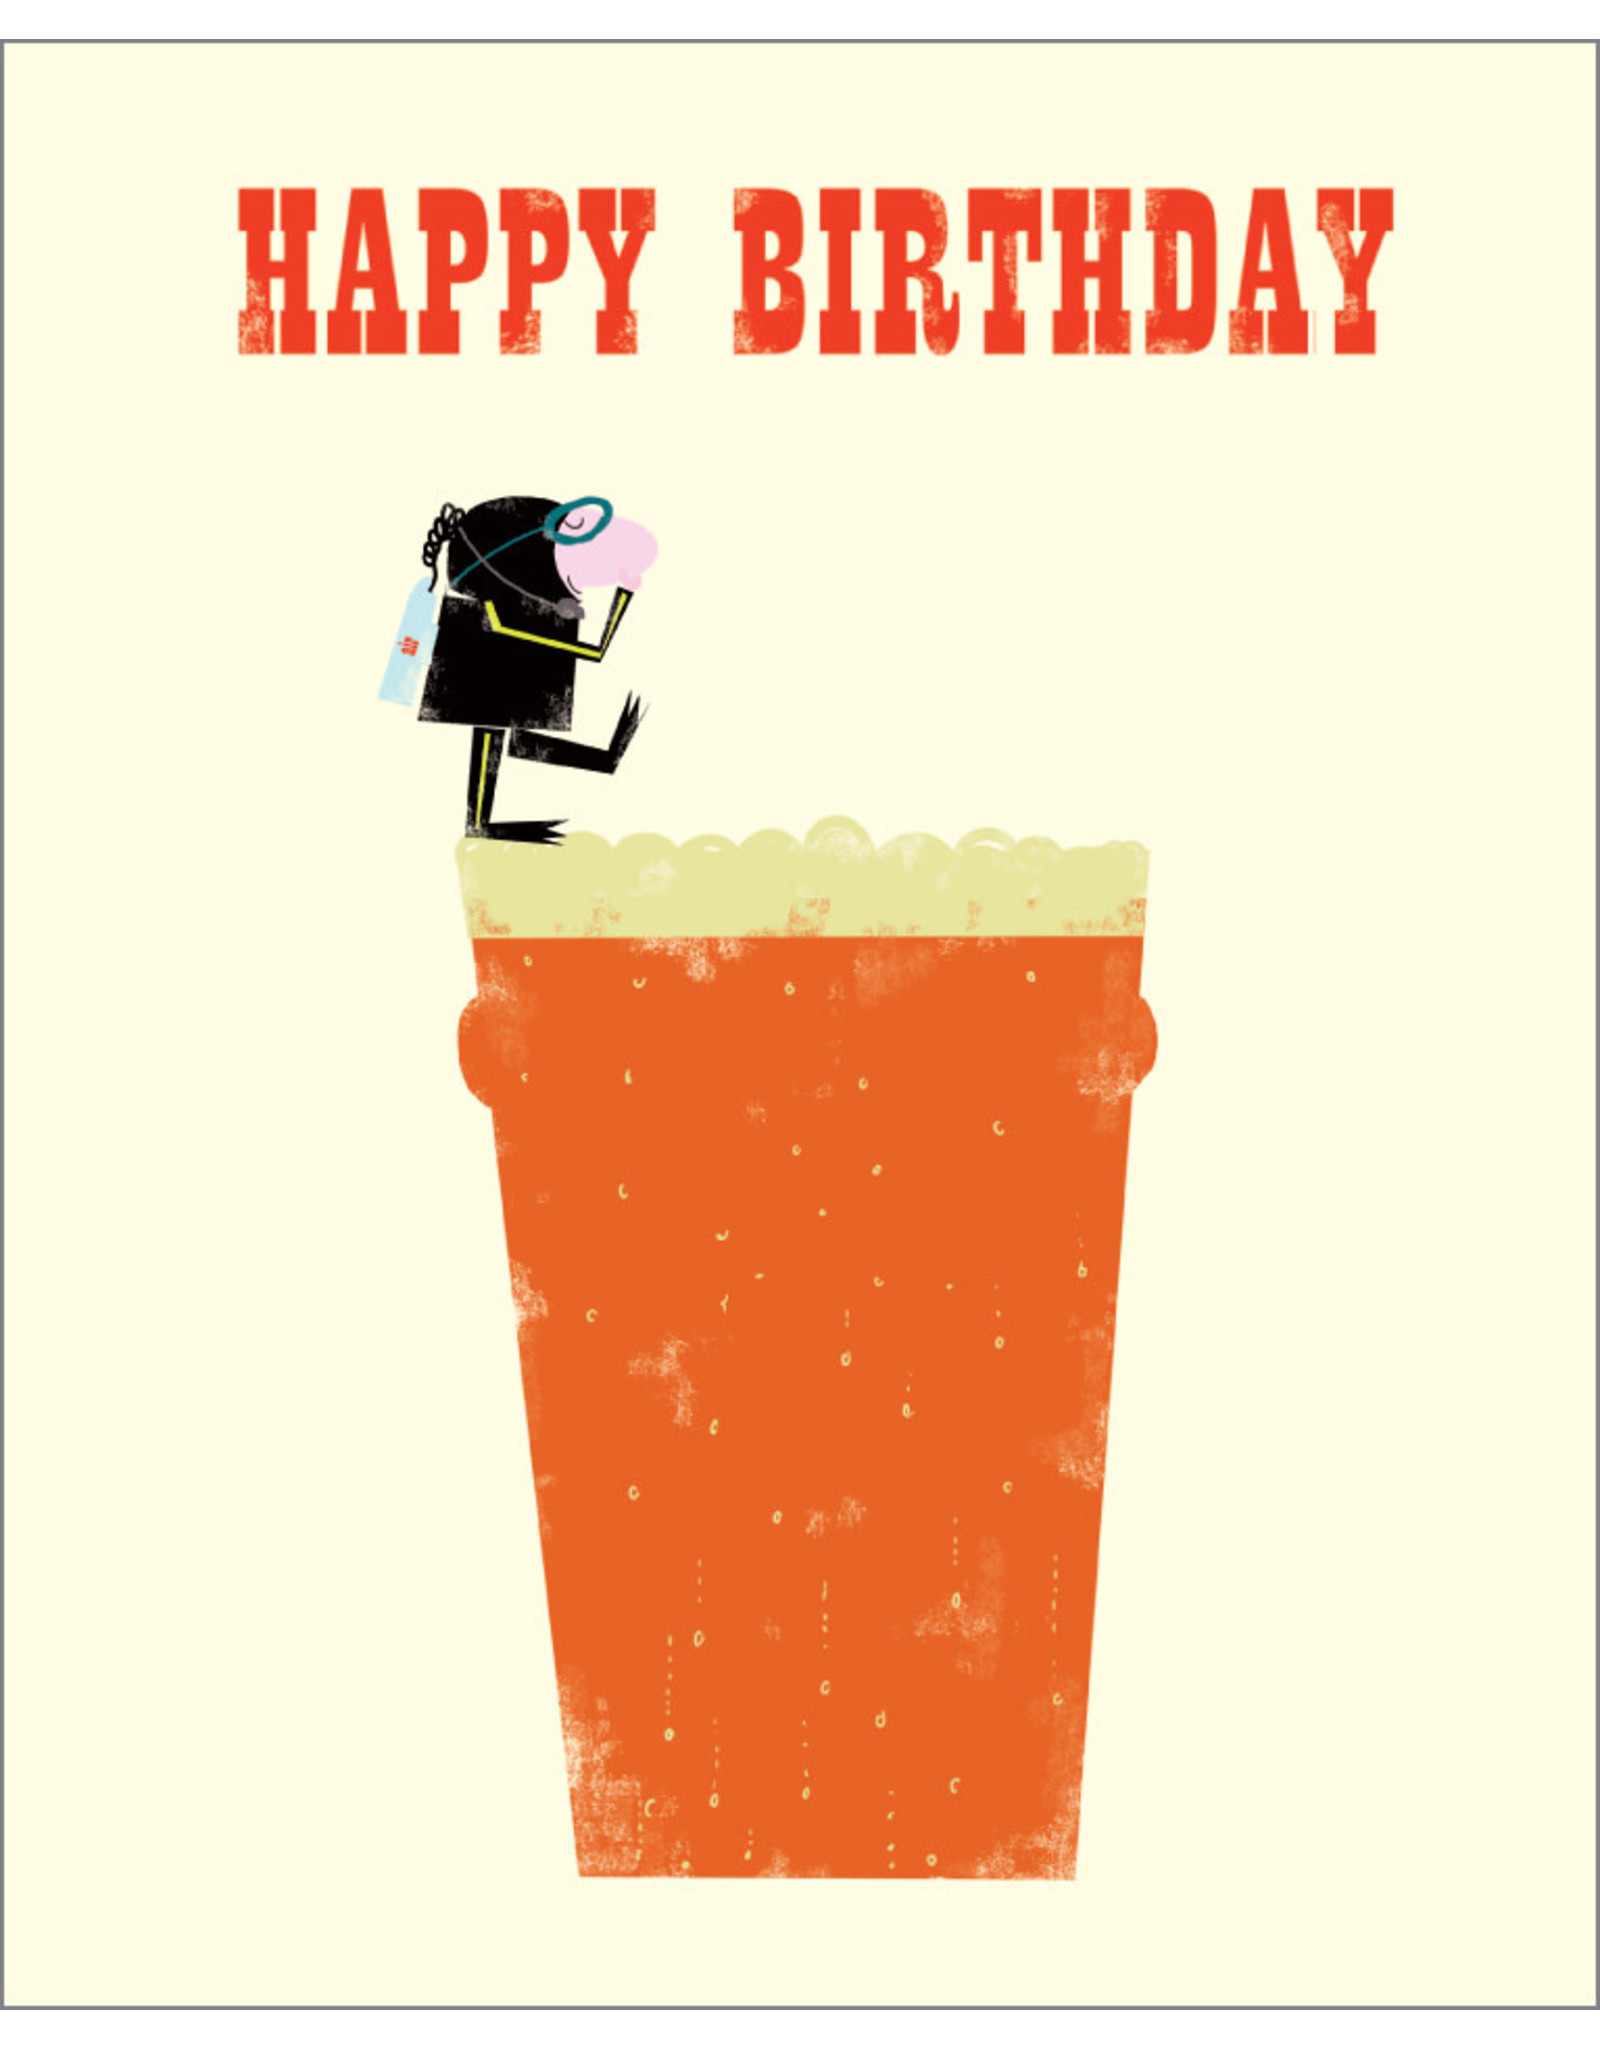 Birthday - Happy Birthday - Pint Of Beers